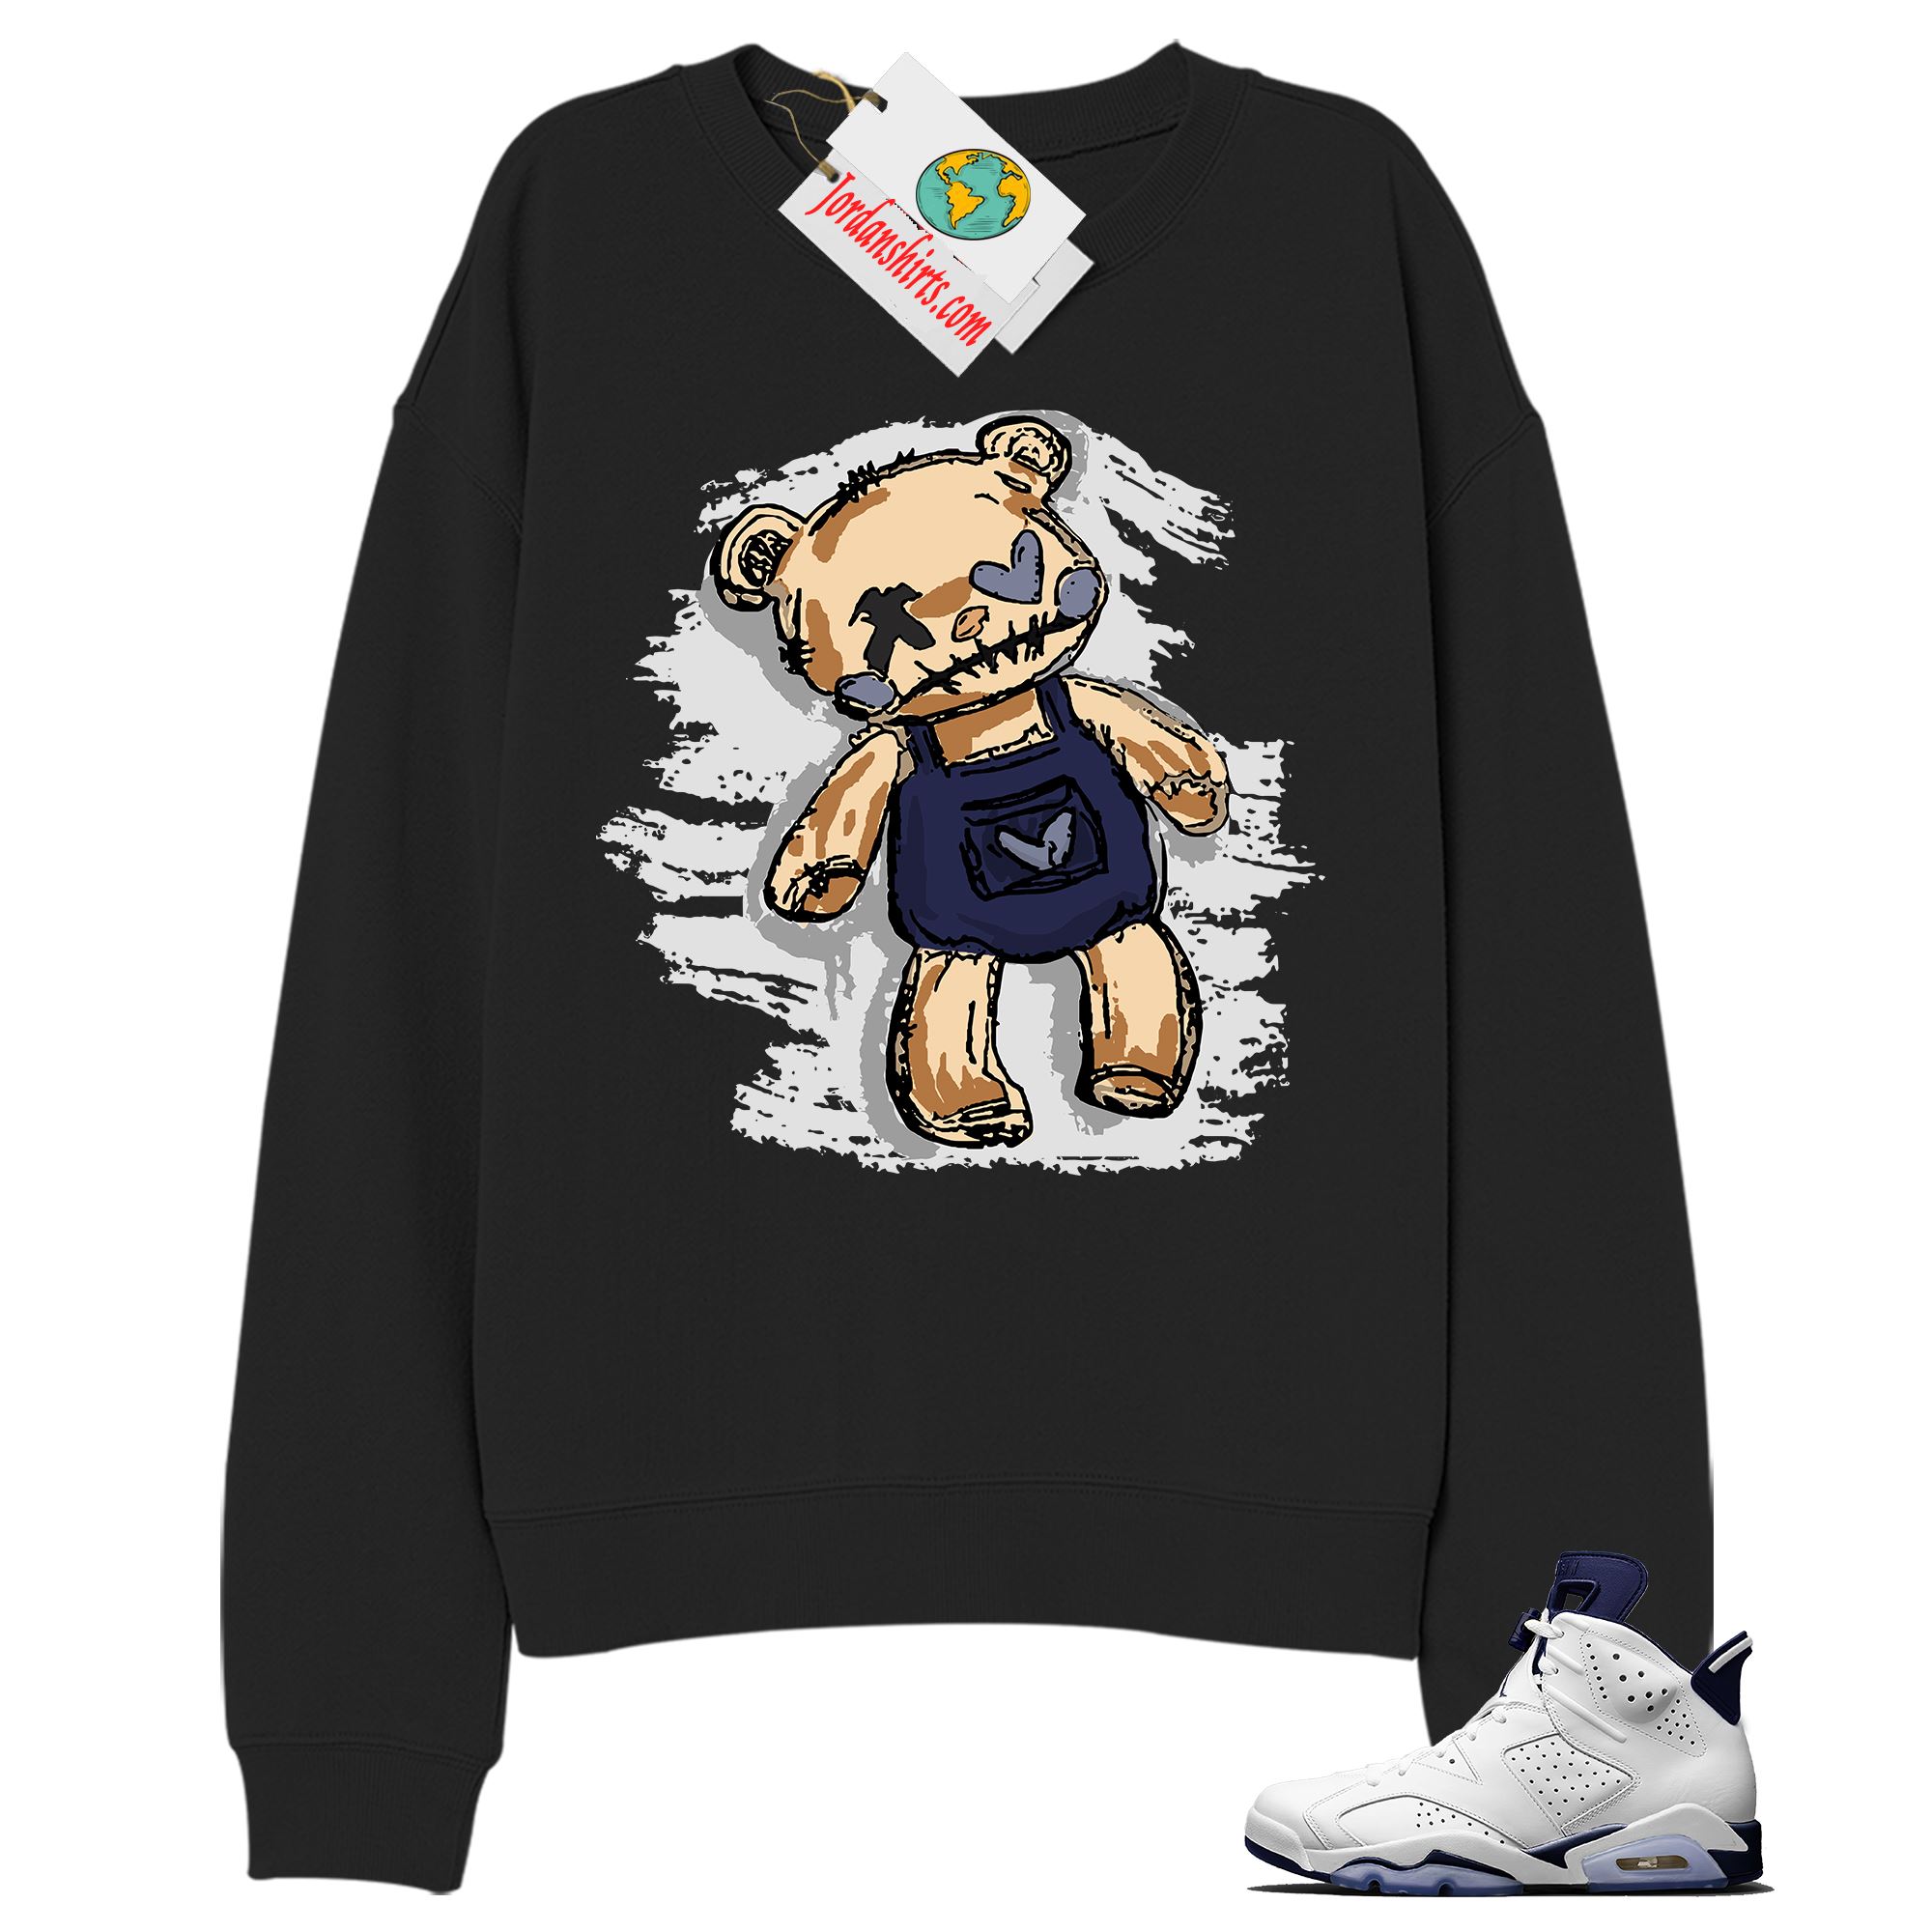 Jordan 6 Sweatshirt, Teddy Bear Broken Heart Black Sweatshirt Air Jordan 6 Midnight Navy 6s Plus Size Up To 5xl